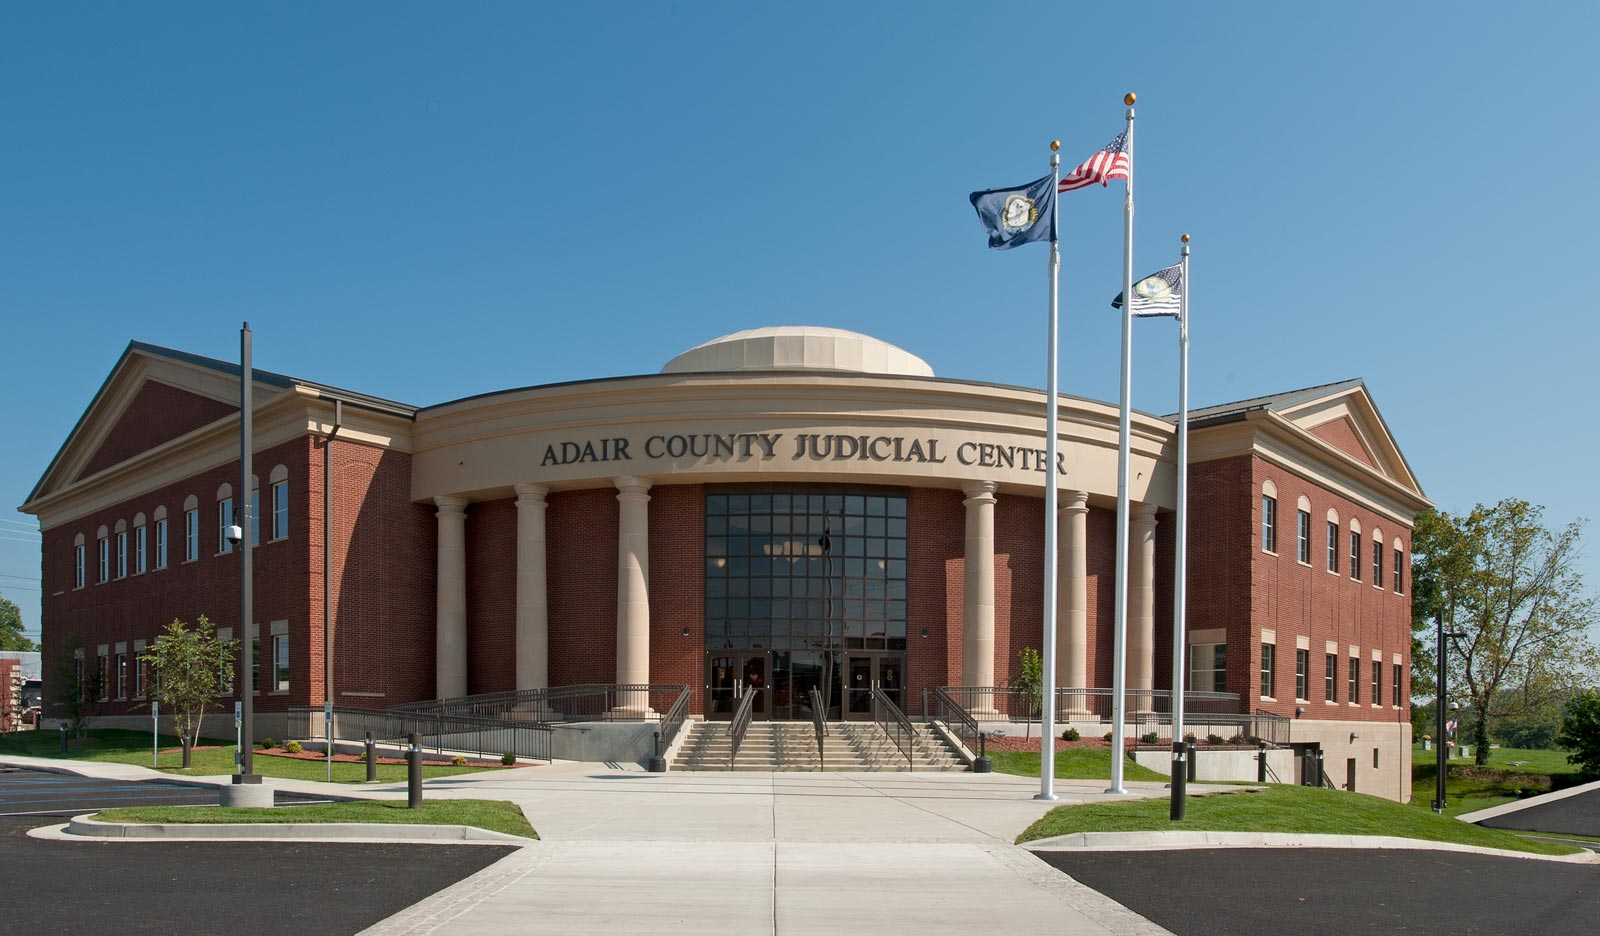 Adair County Judicial Center